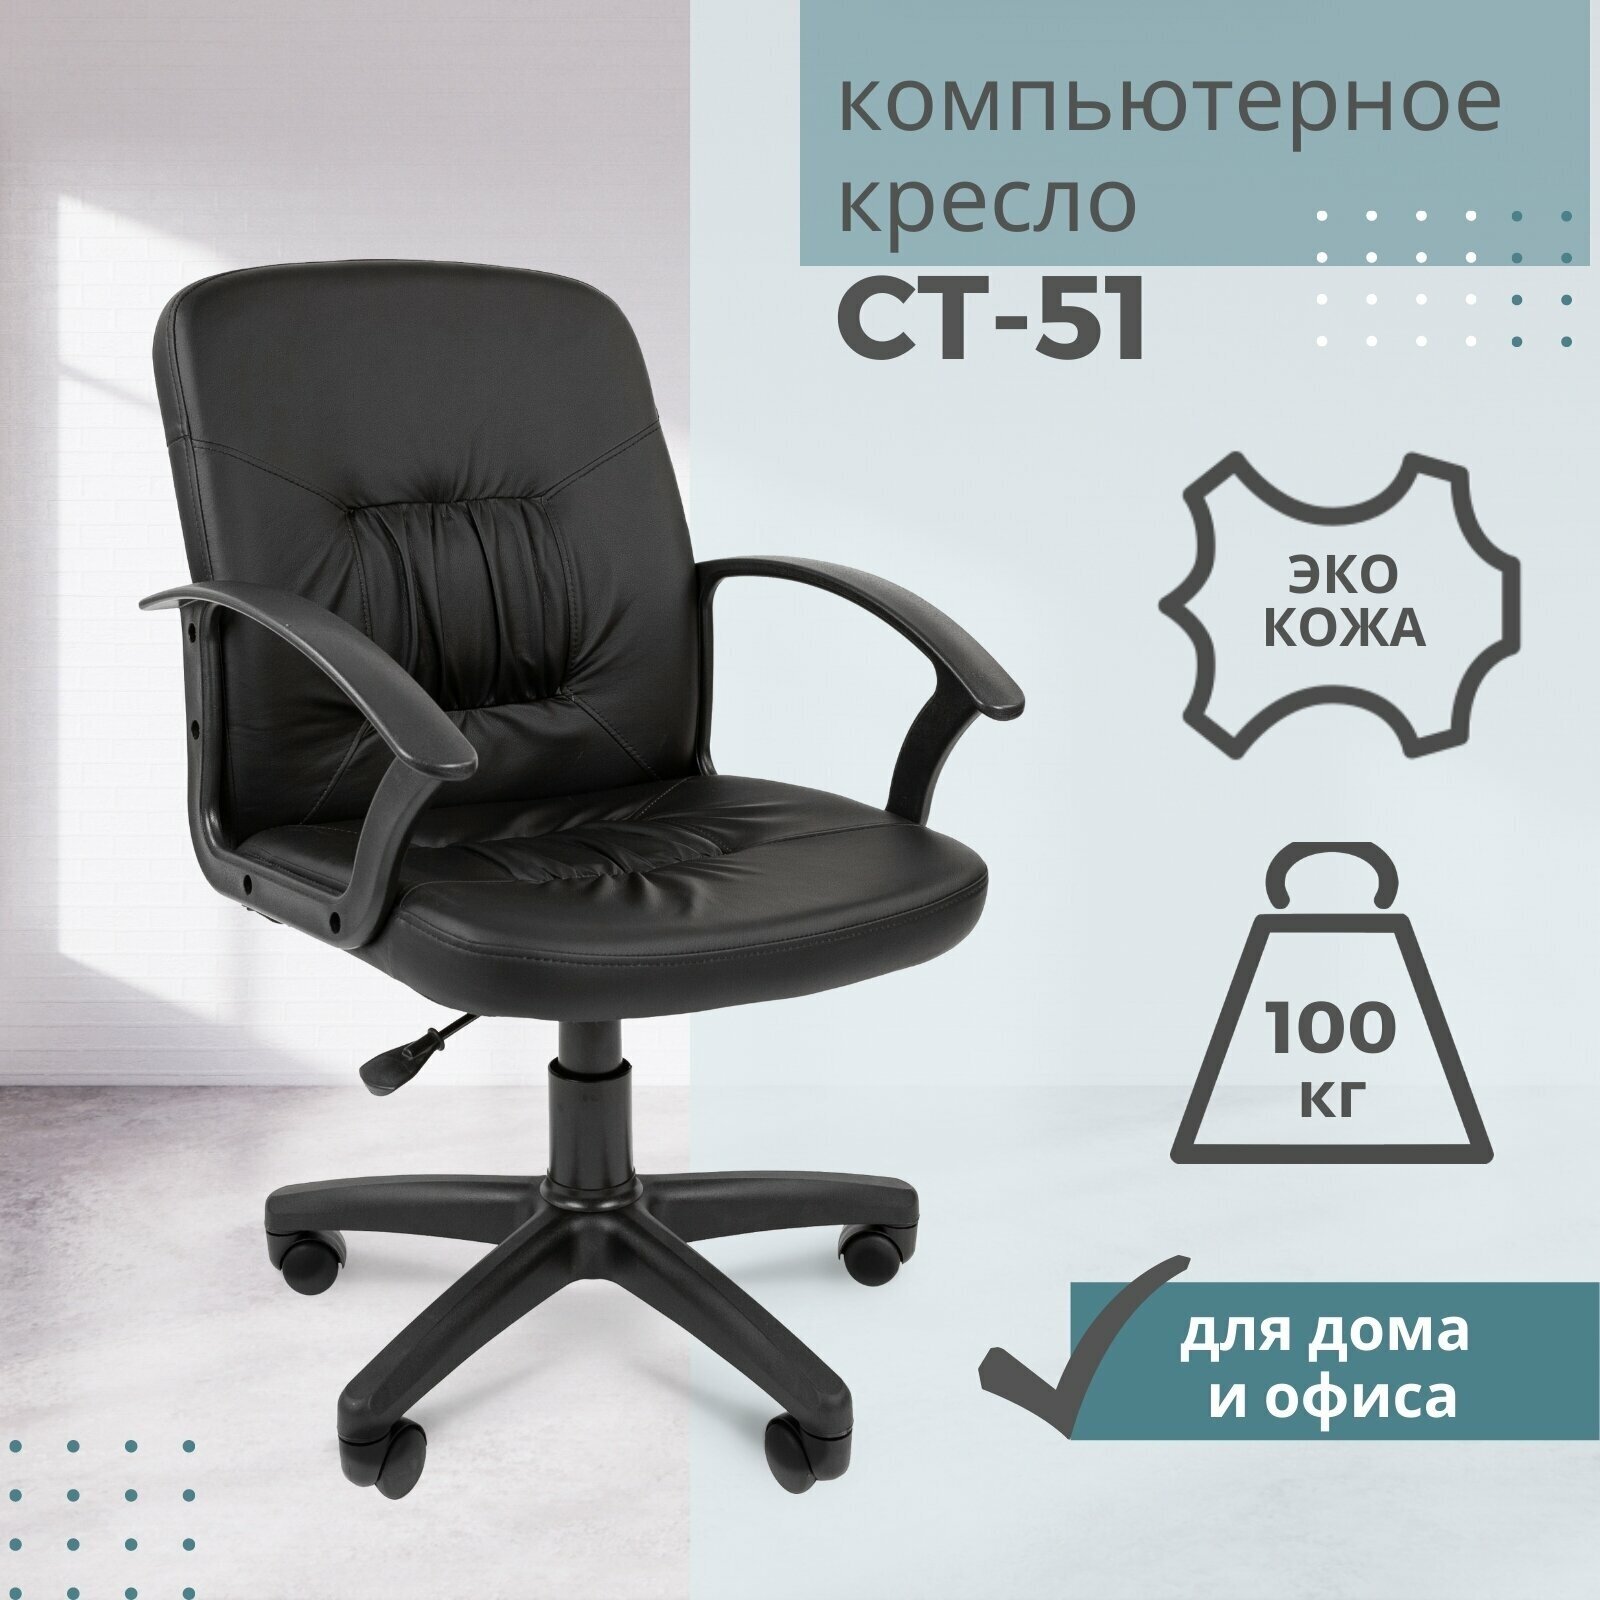 Компьютерное кресло Chairman Стандарт СТ-51 офисное